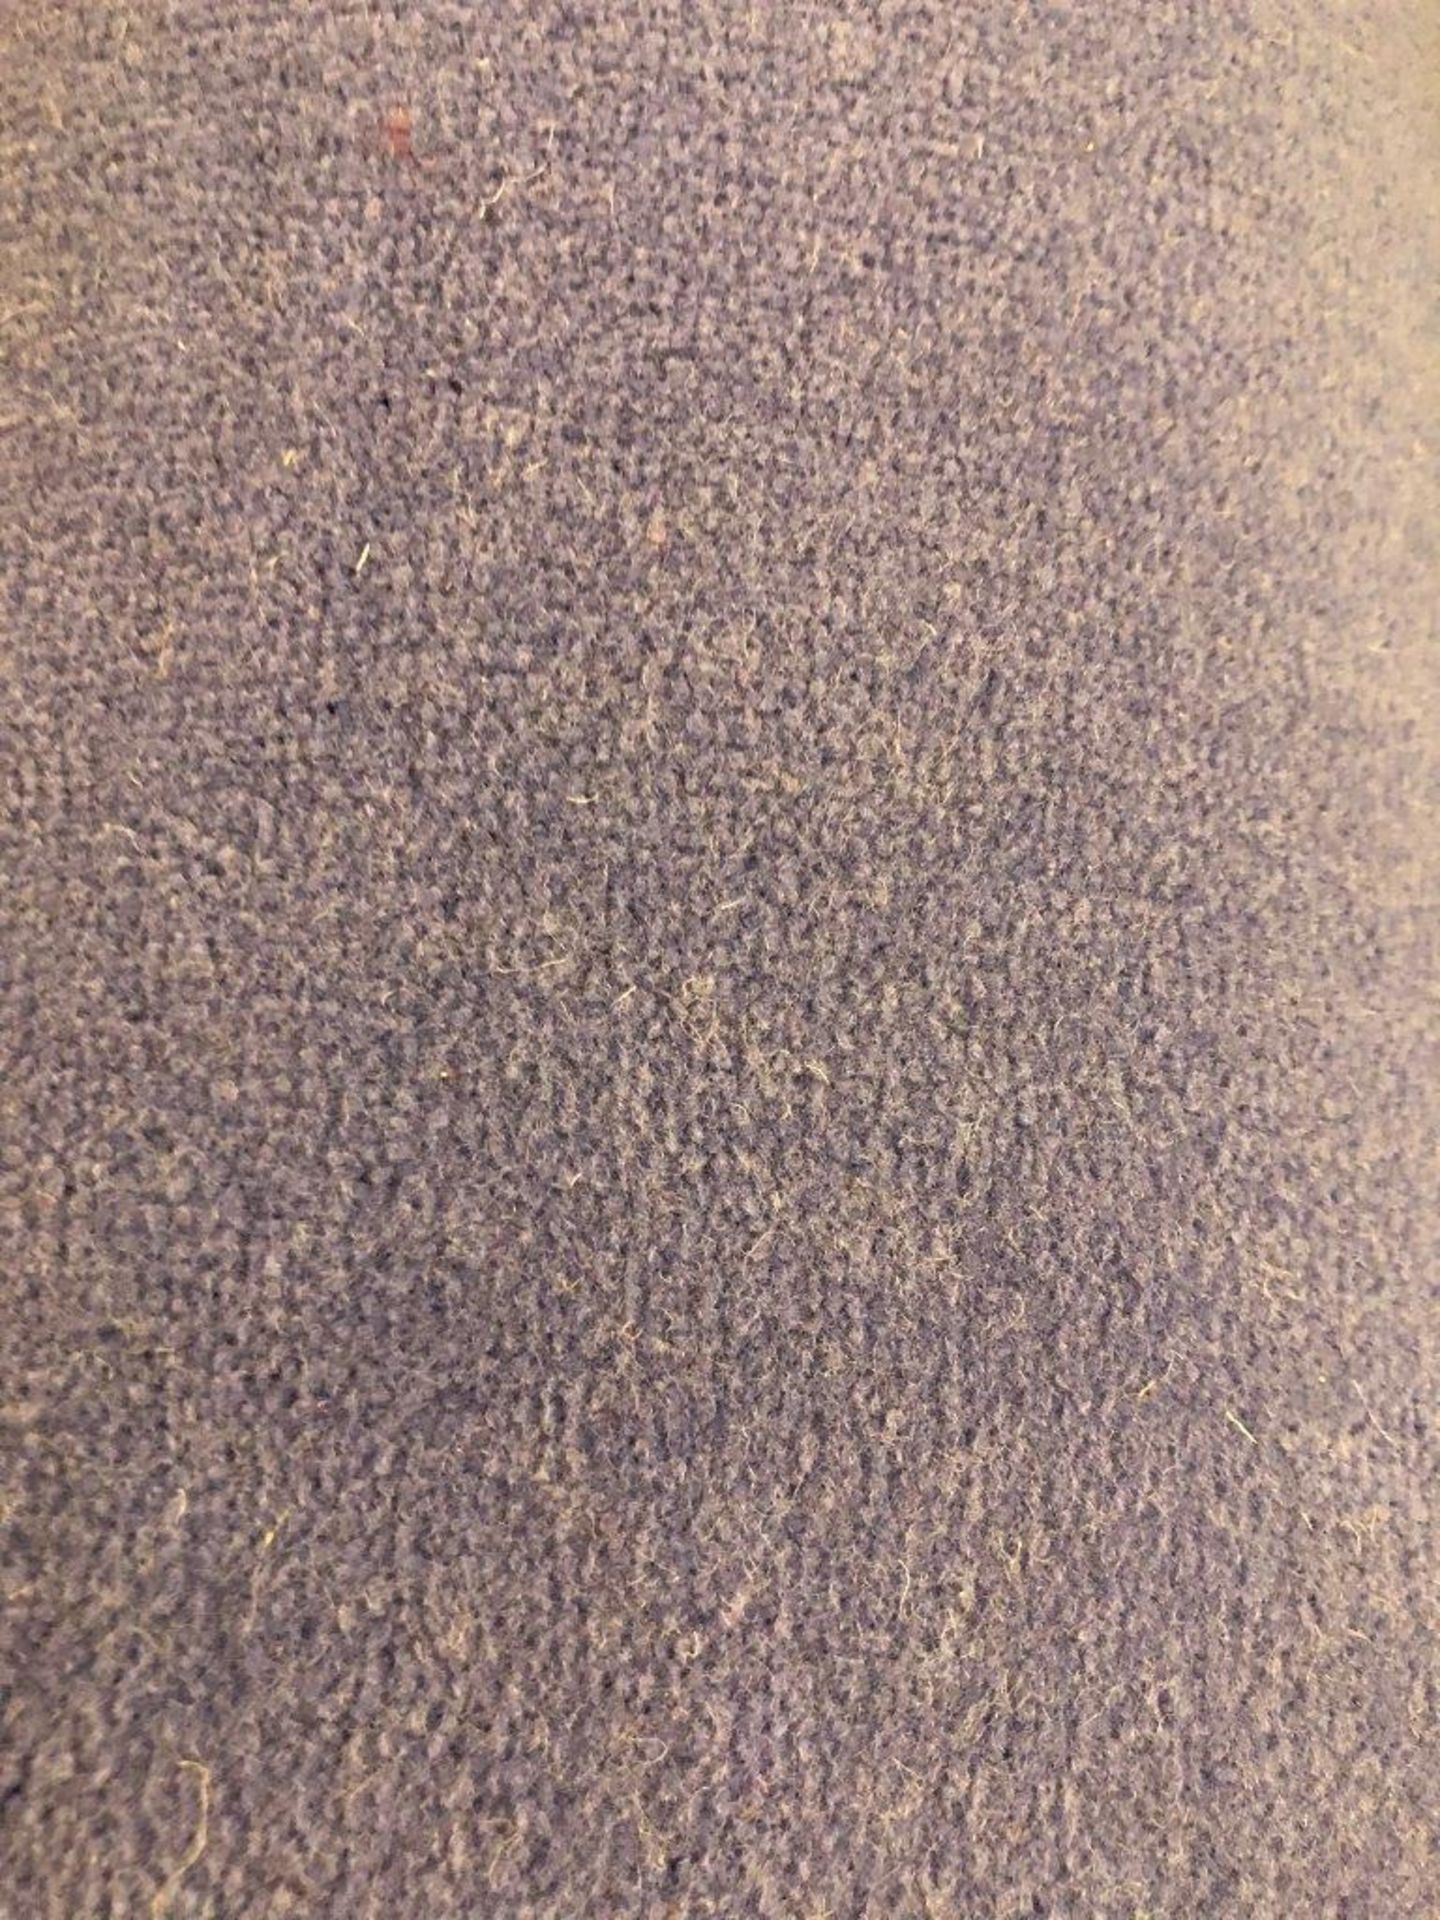 1 x Ryalux Carpet End Roll - Purple 6.1x4.0m2 - Image 3 of 3